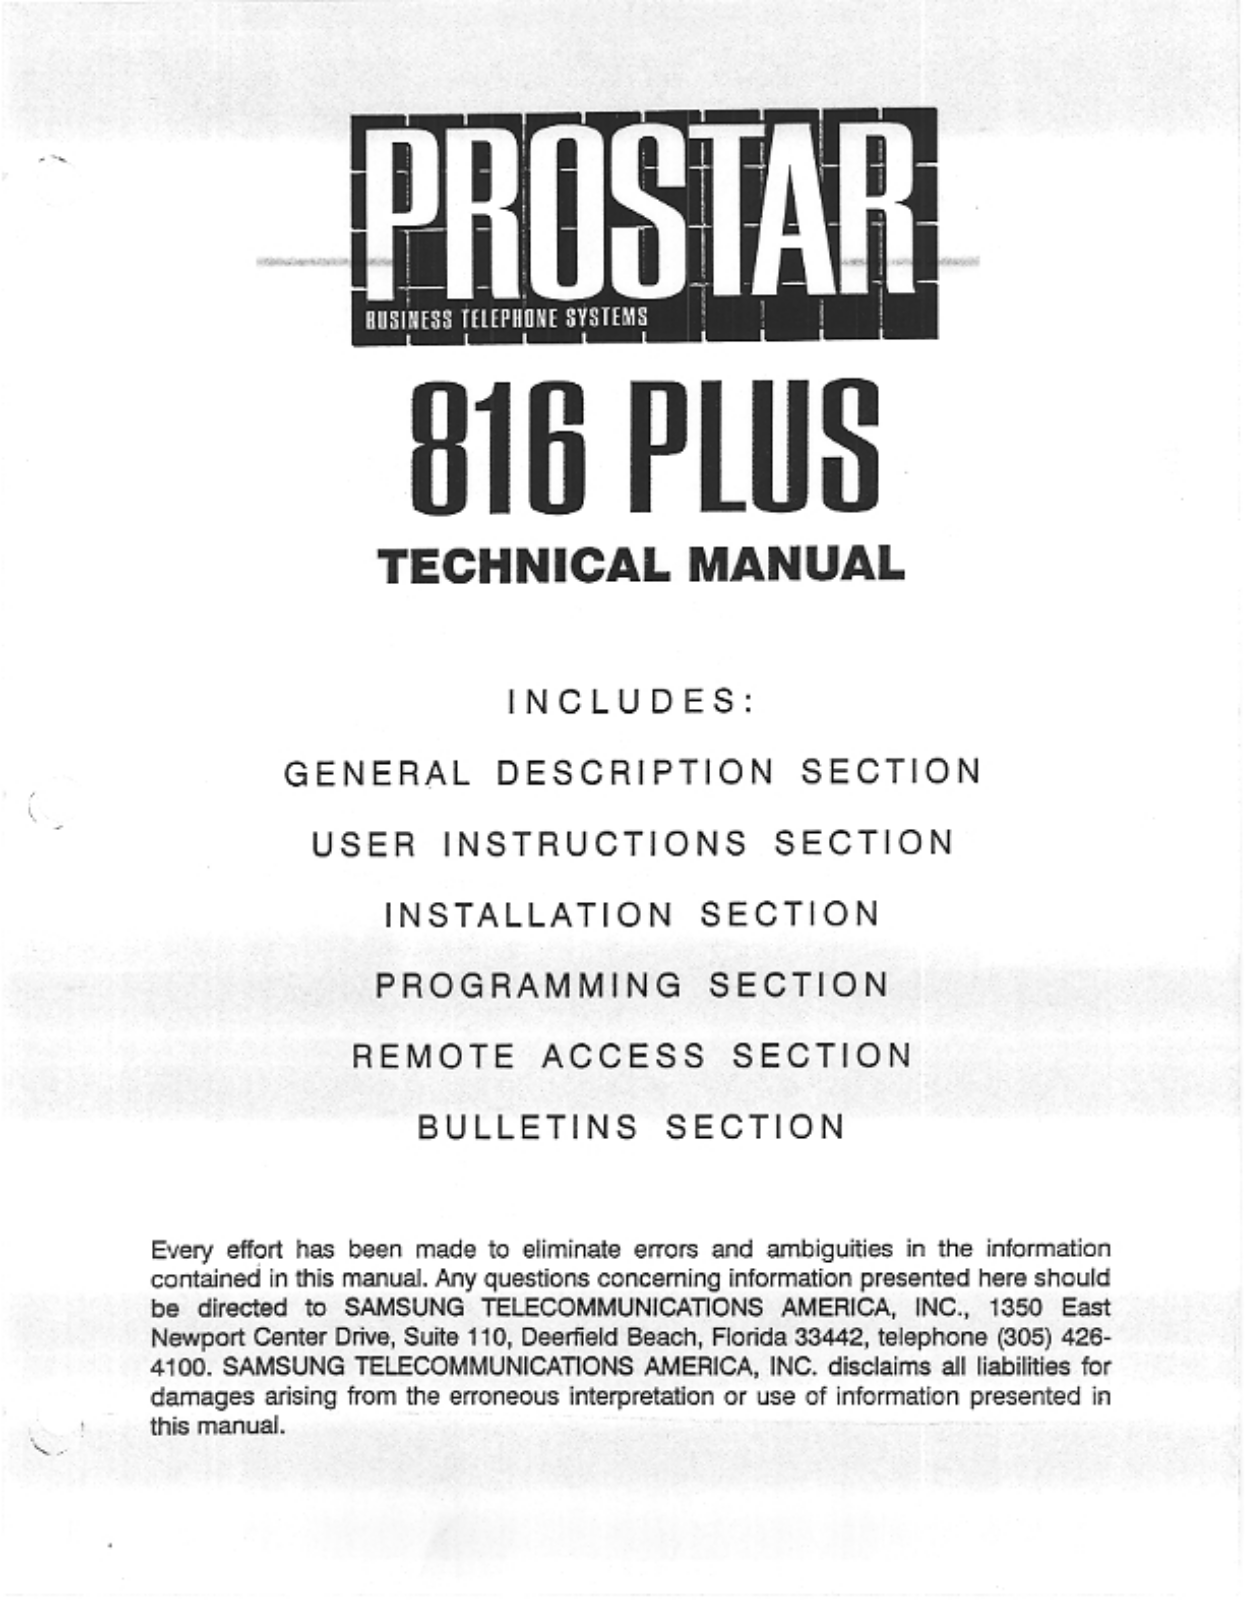 Samsung Prostar 816 Plus Tech Manual